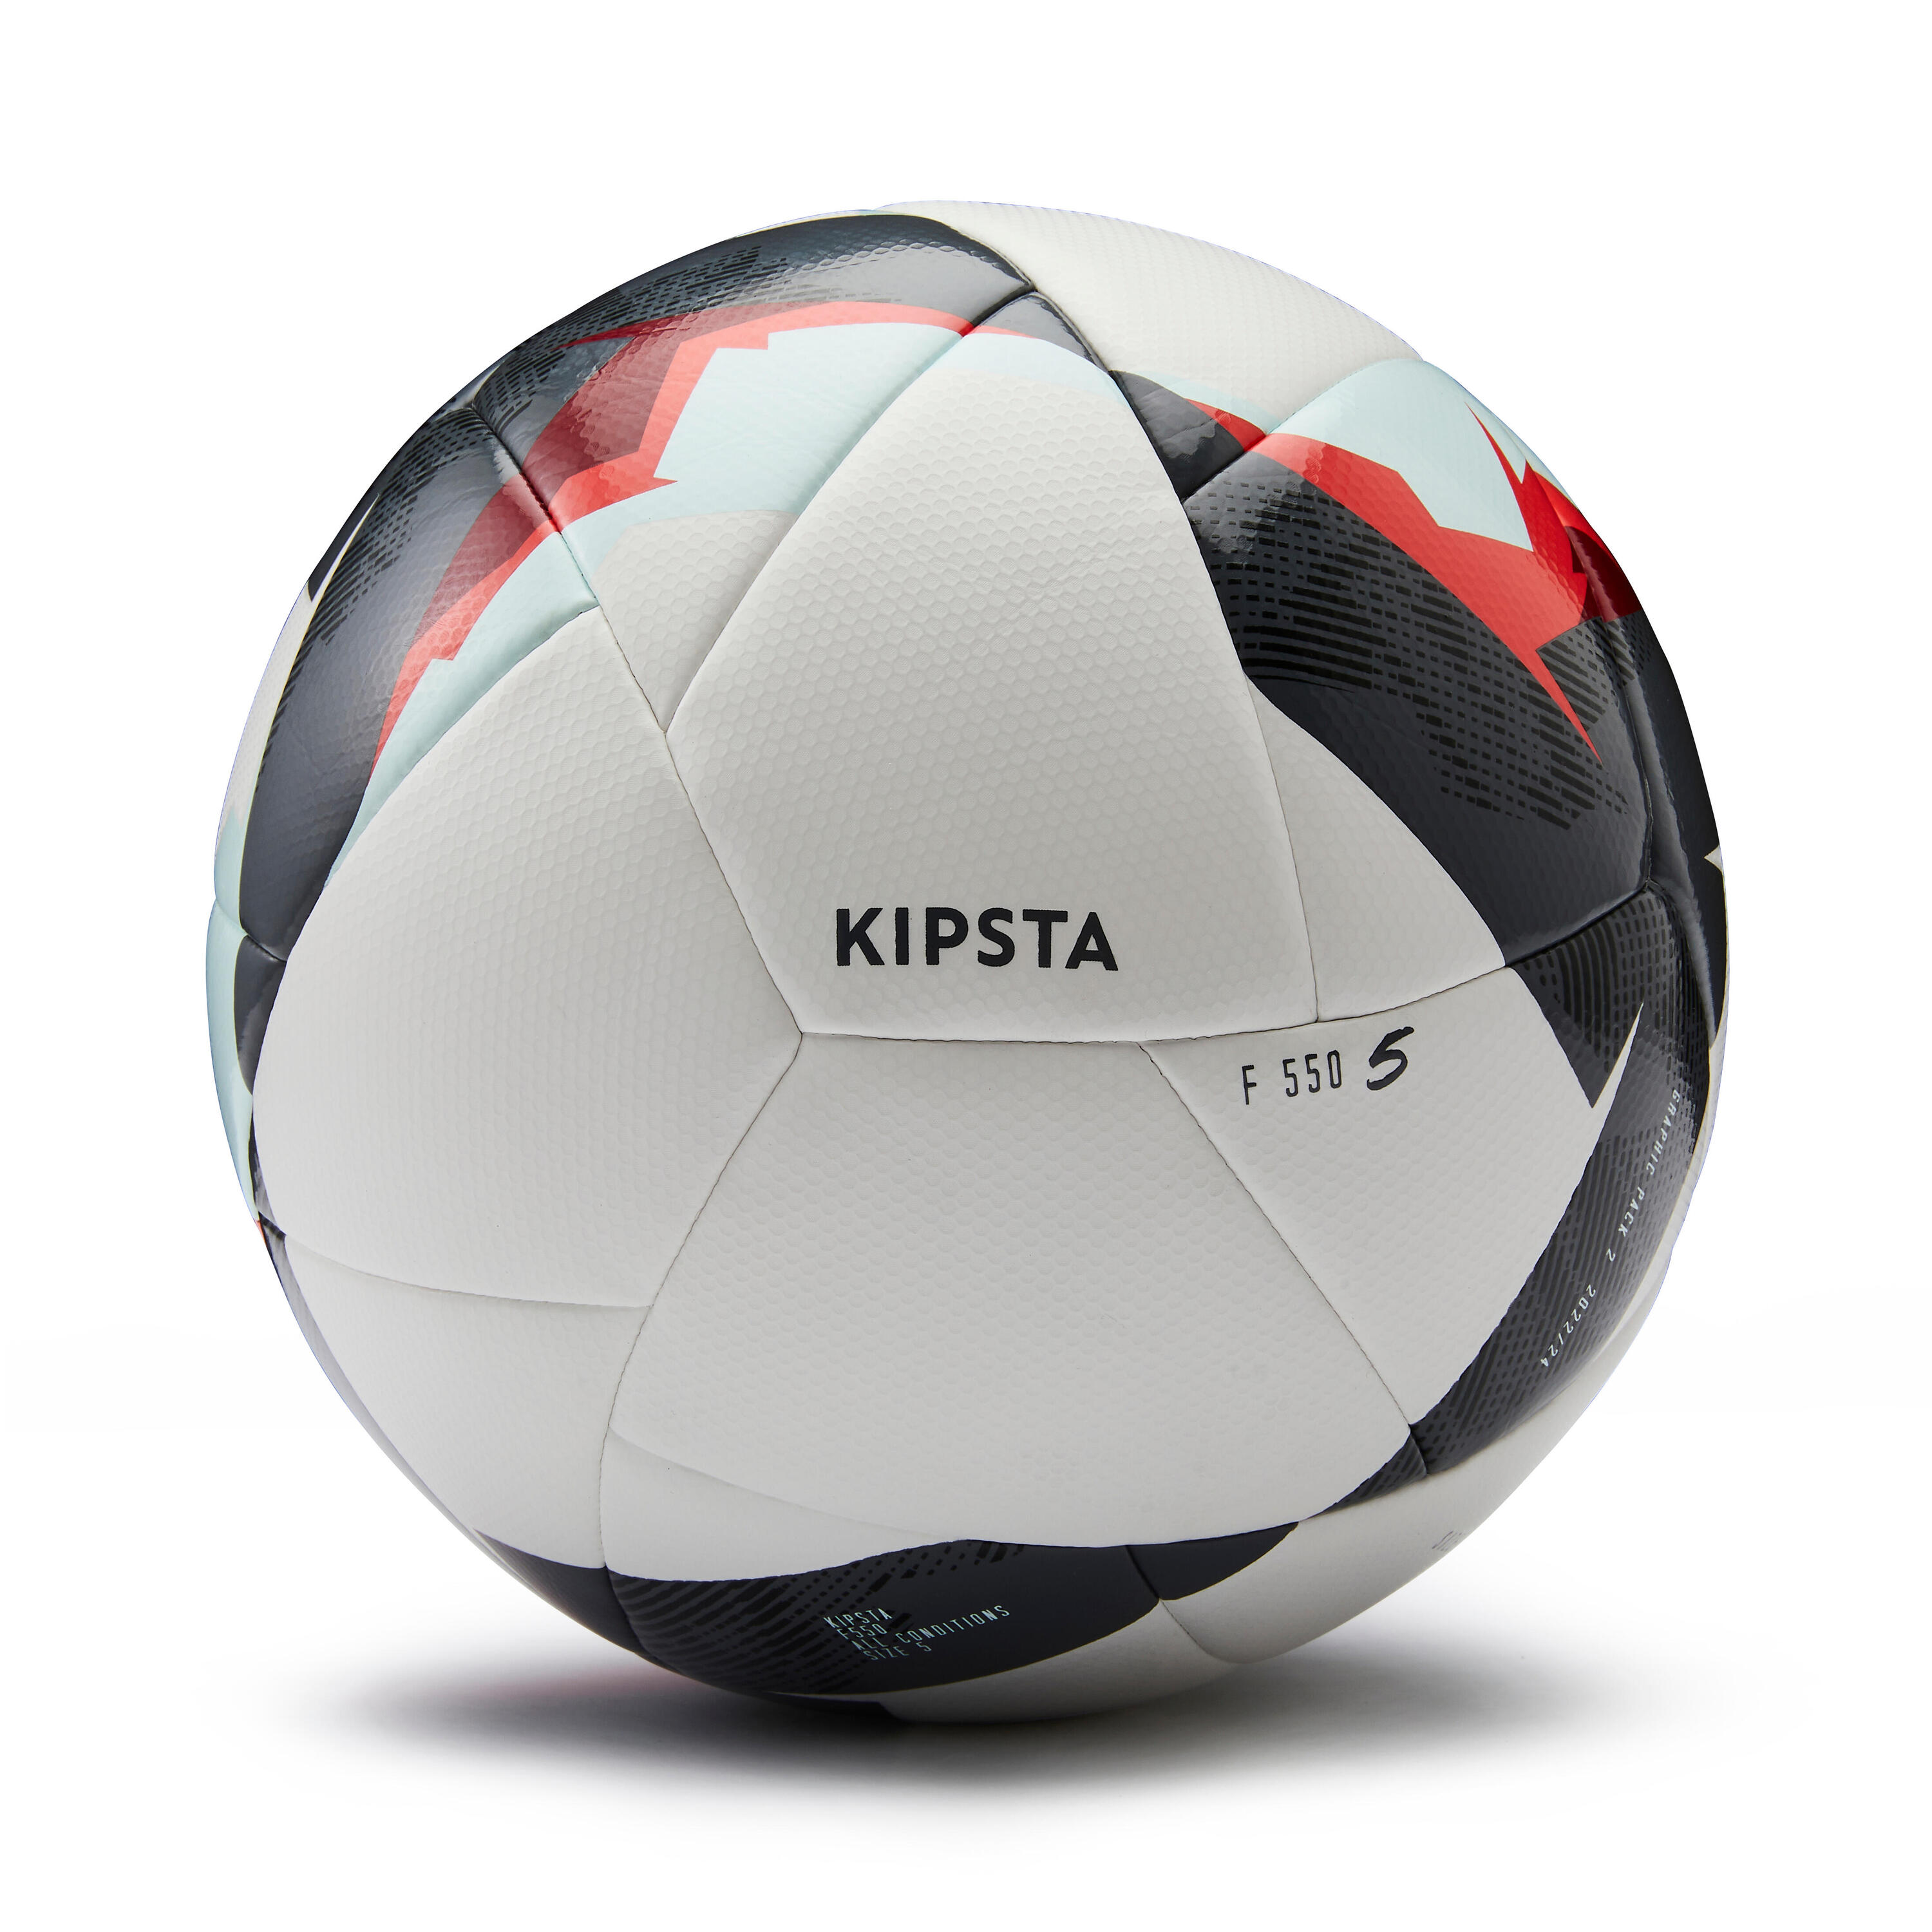 Hybrid Football FIFA Basic F550 Size 5 - White/Red 2/7